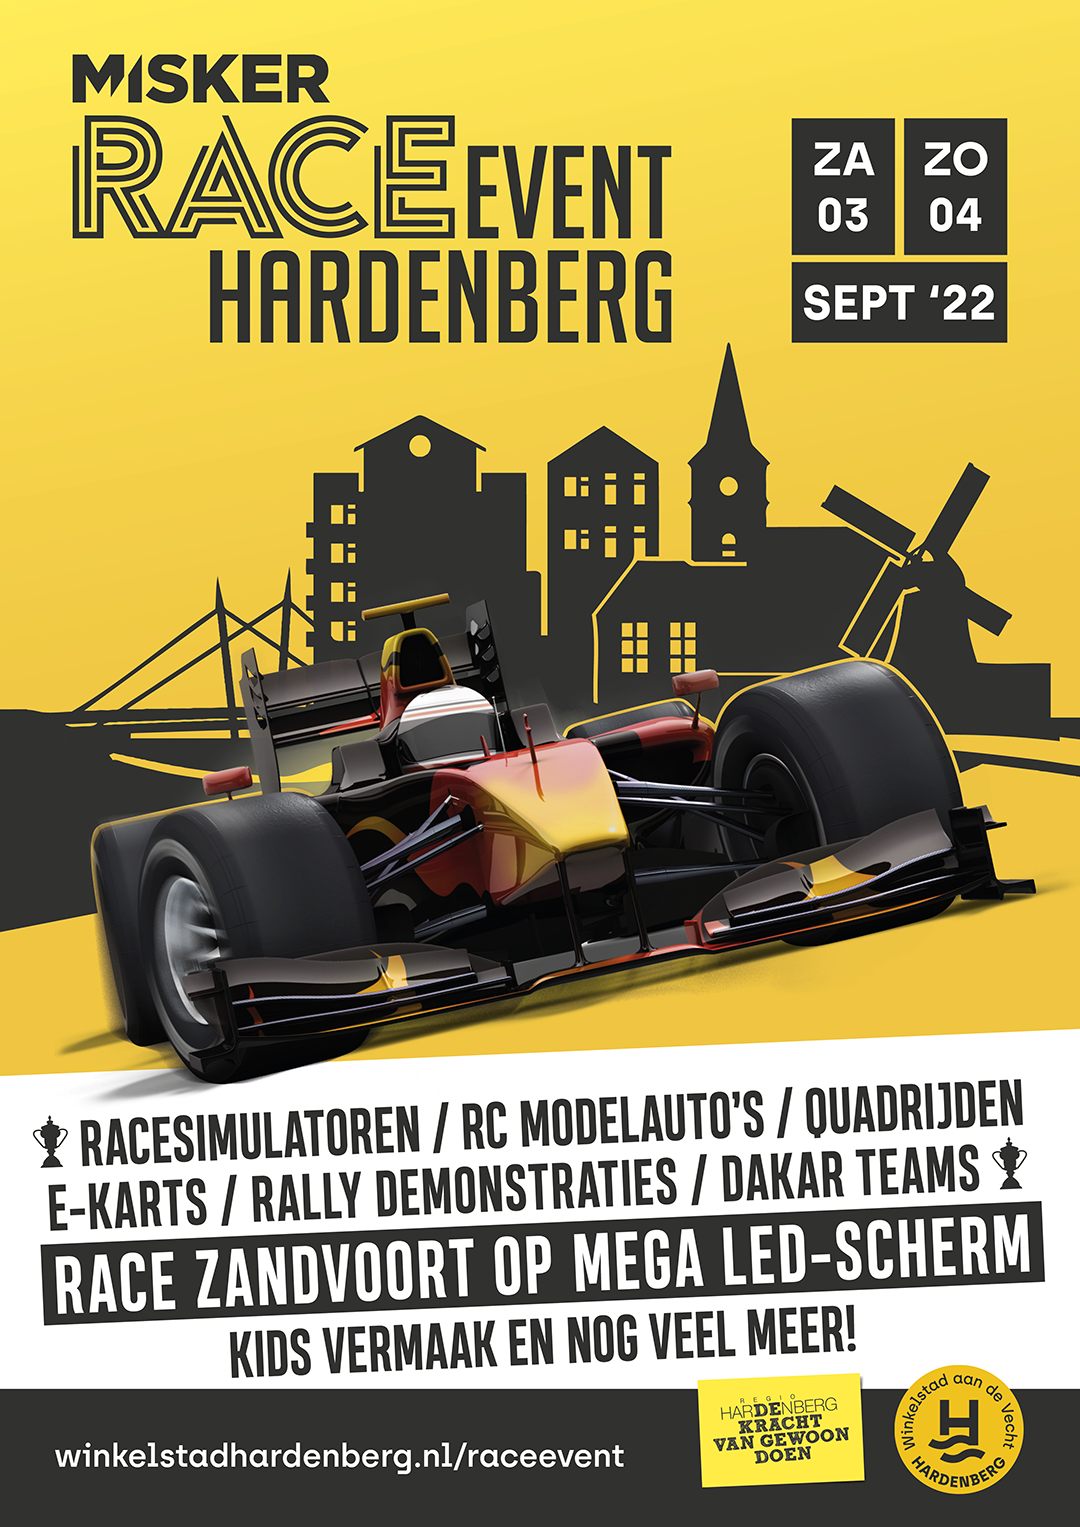 Misker Race Event Hardenberg